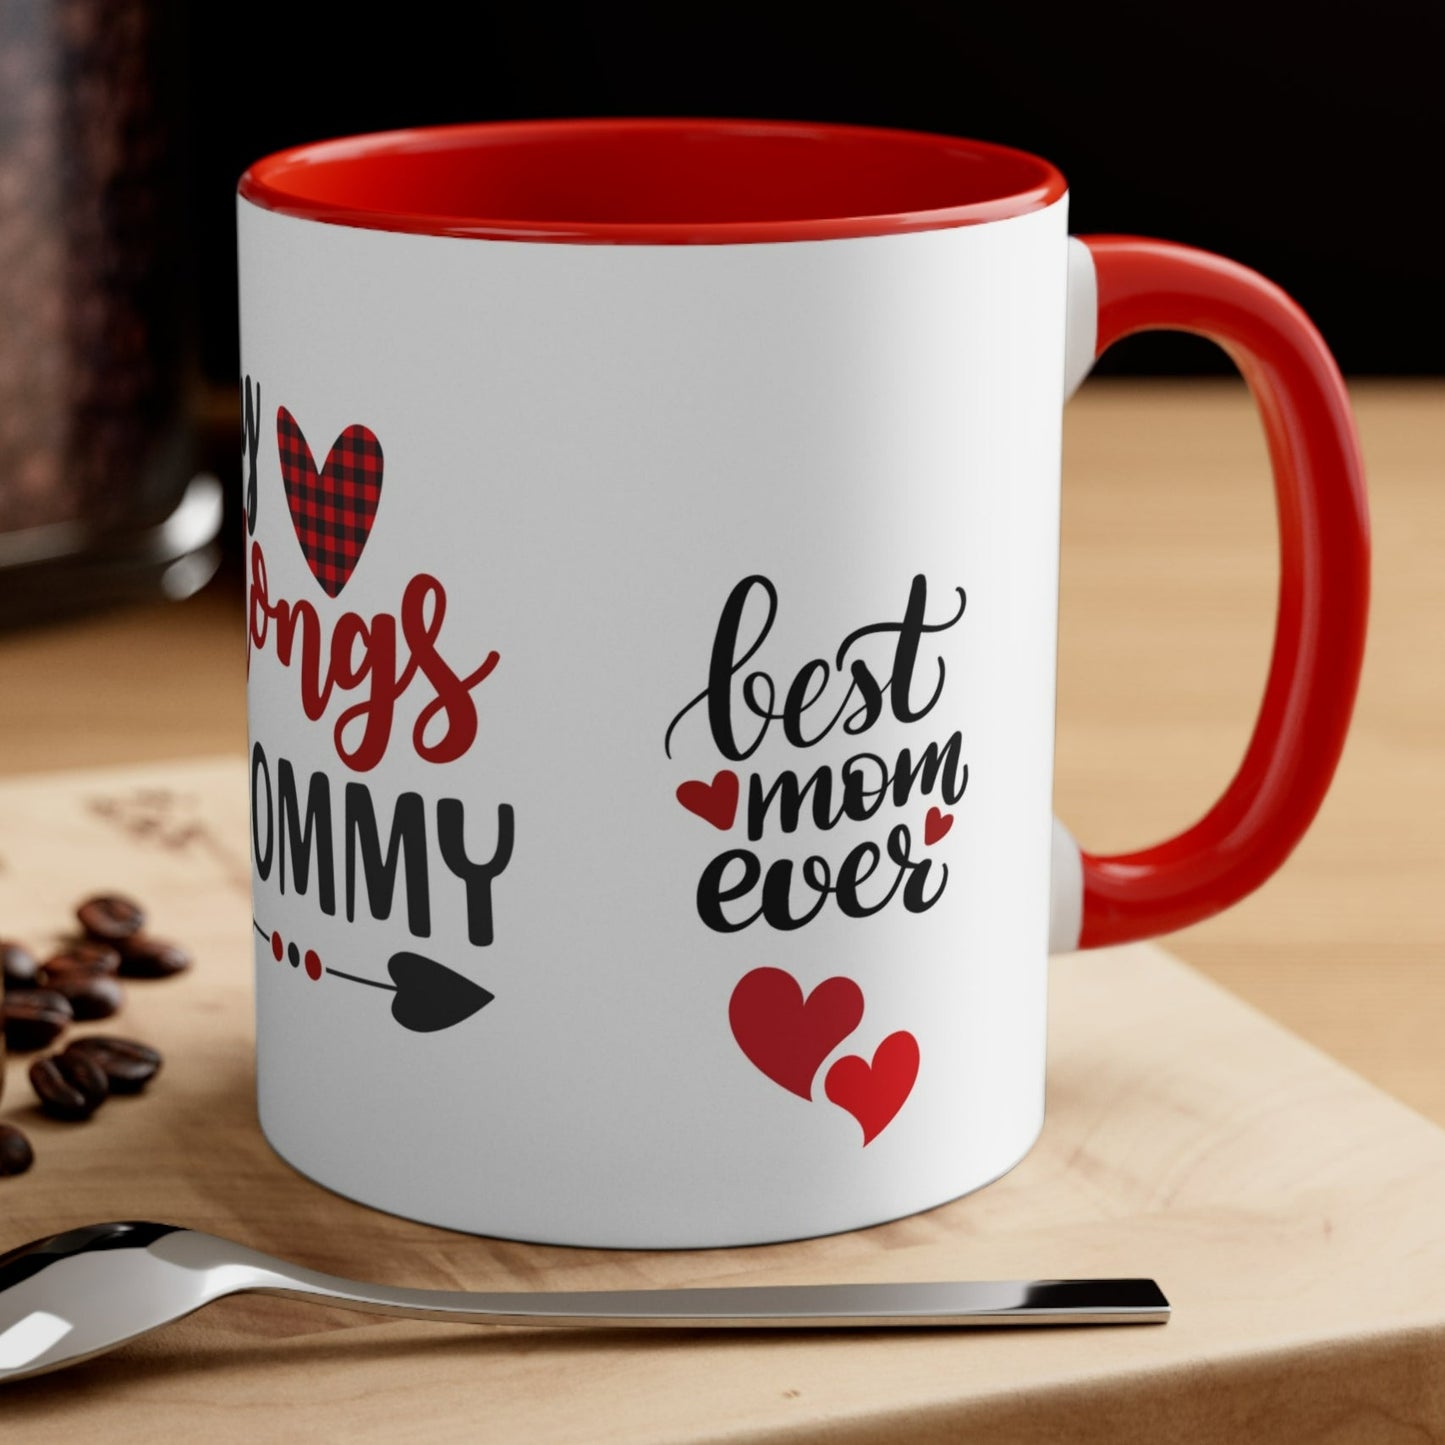 I Love That You're My Mom Coffee Mug – Daisy Shoppe - cute clothes